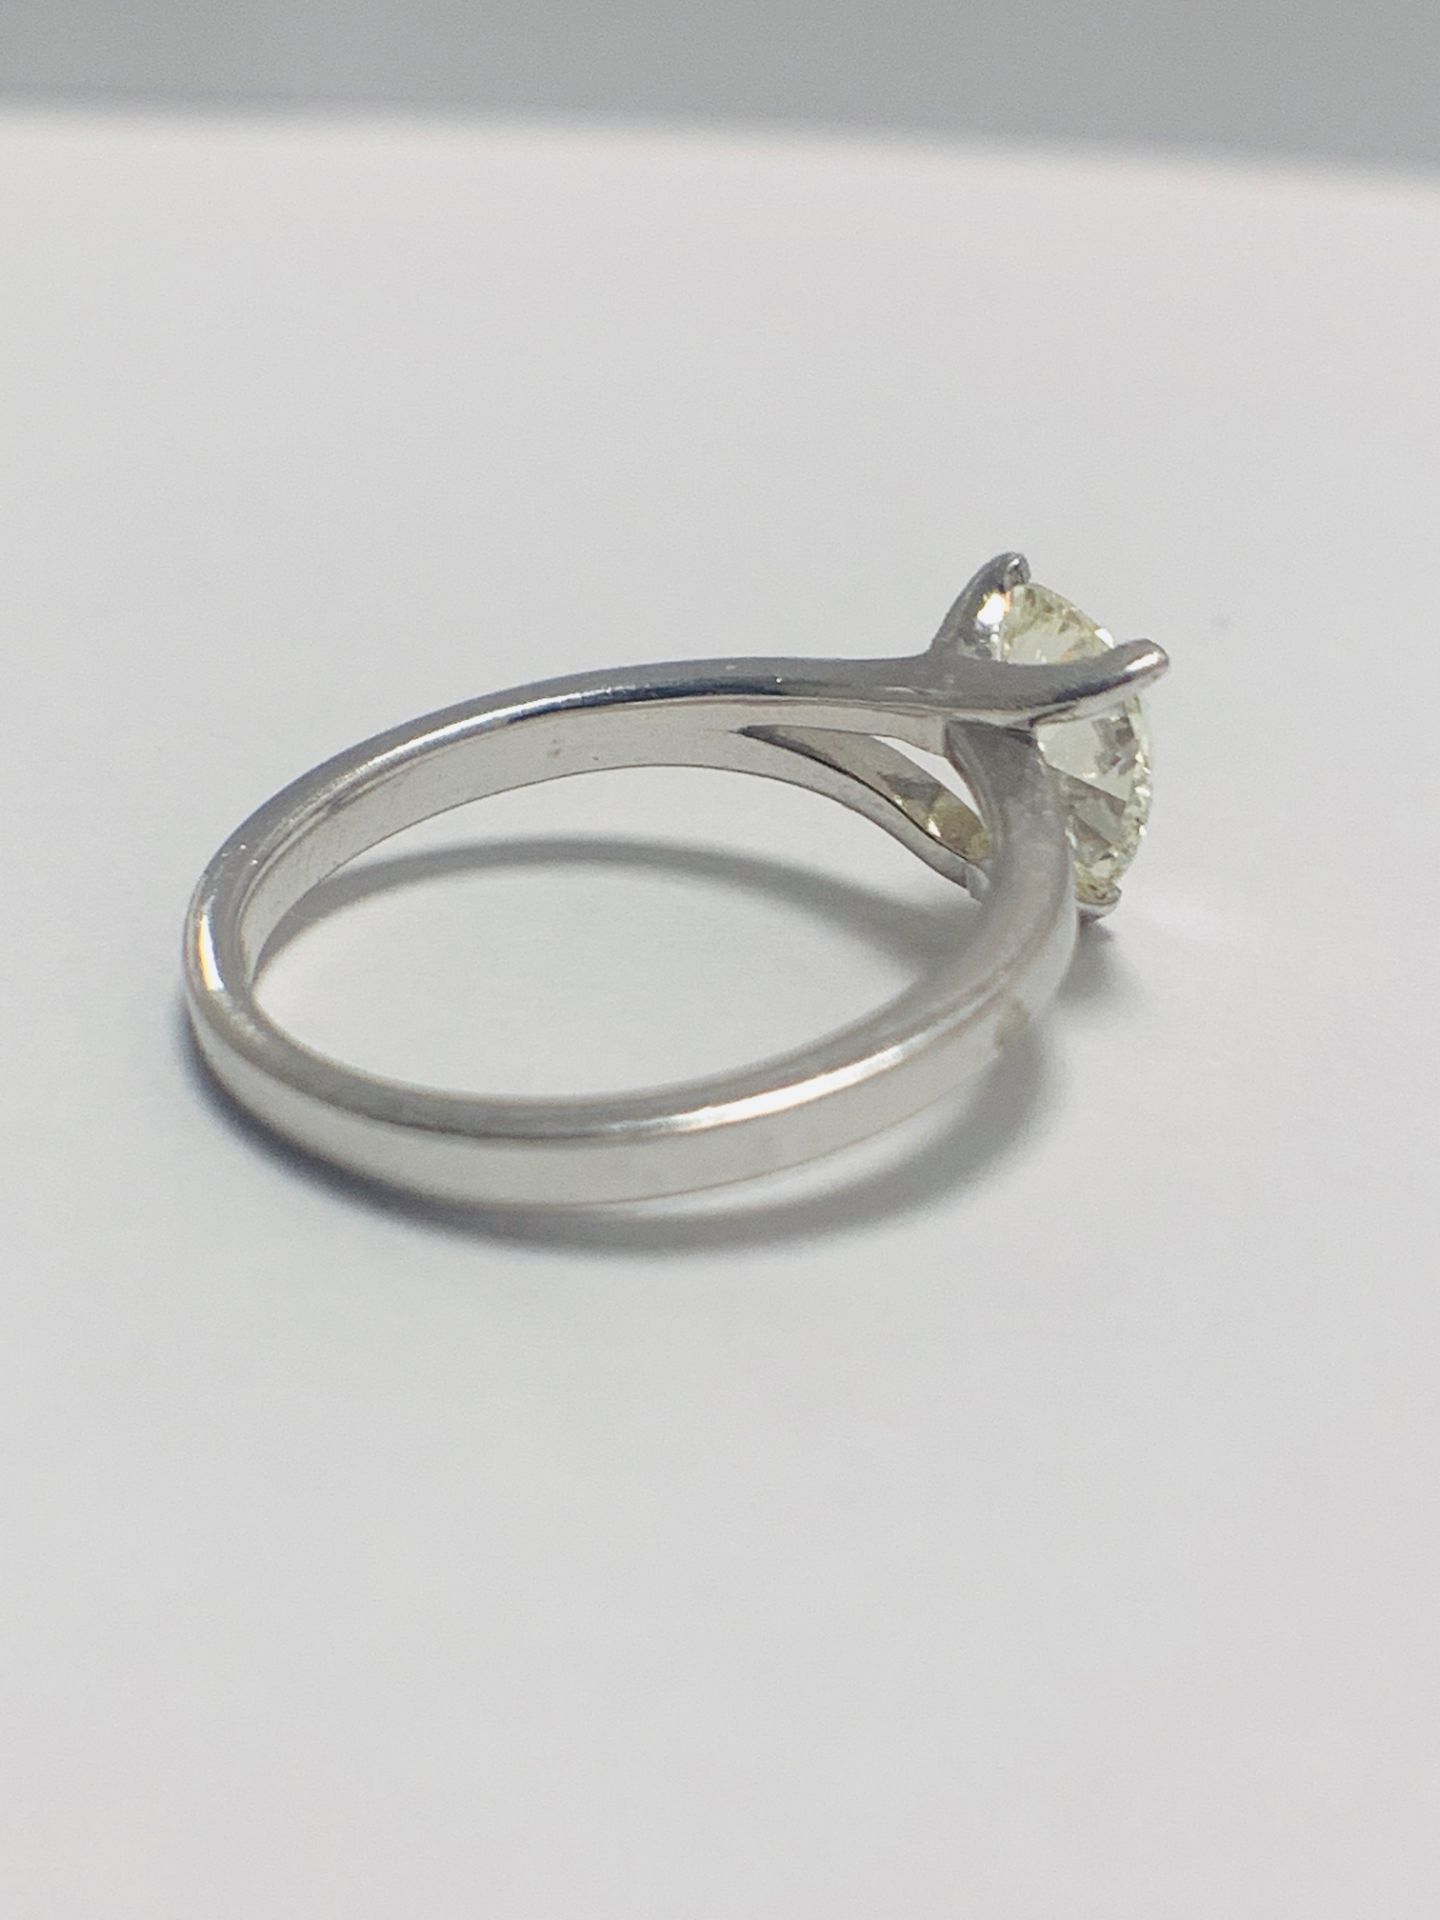 1Ct Pearshape Diamond Platinum Solitaire Ring. - Image 6 of 9